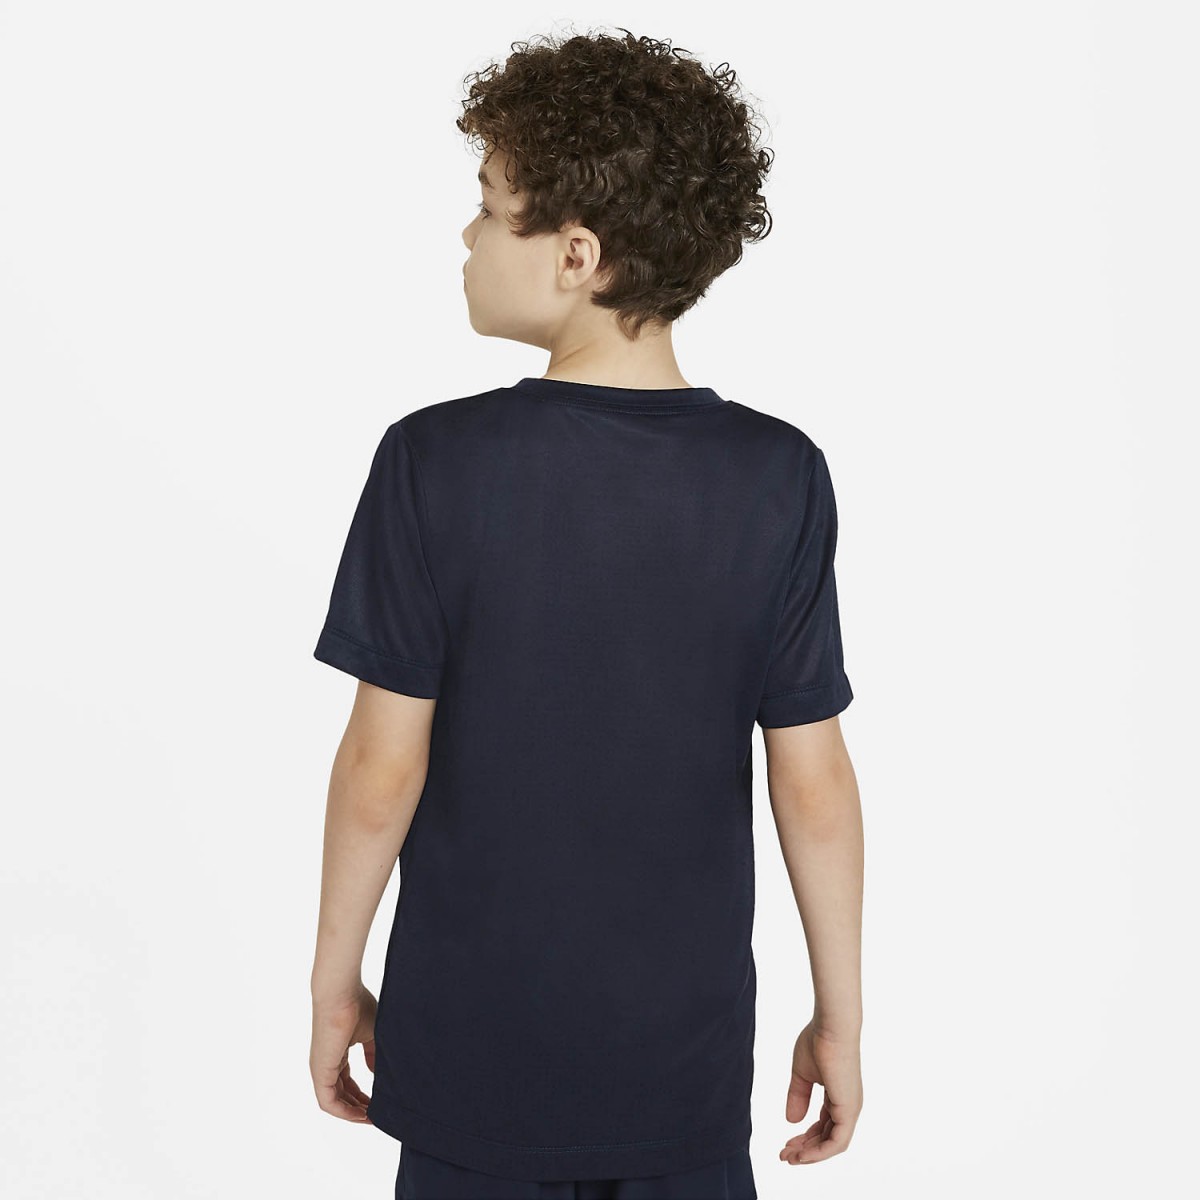 Теннисная футболка детская Nike Court Tee Rafa obsidian/white